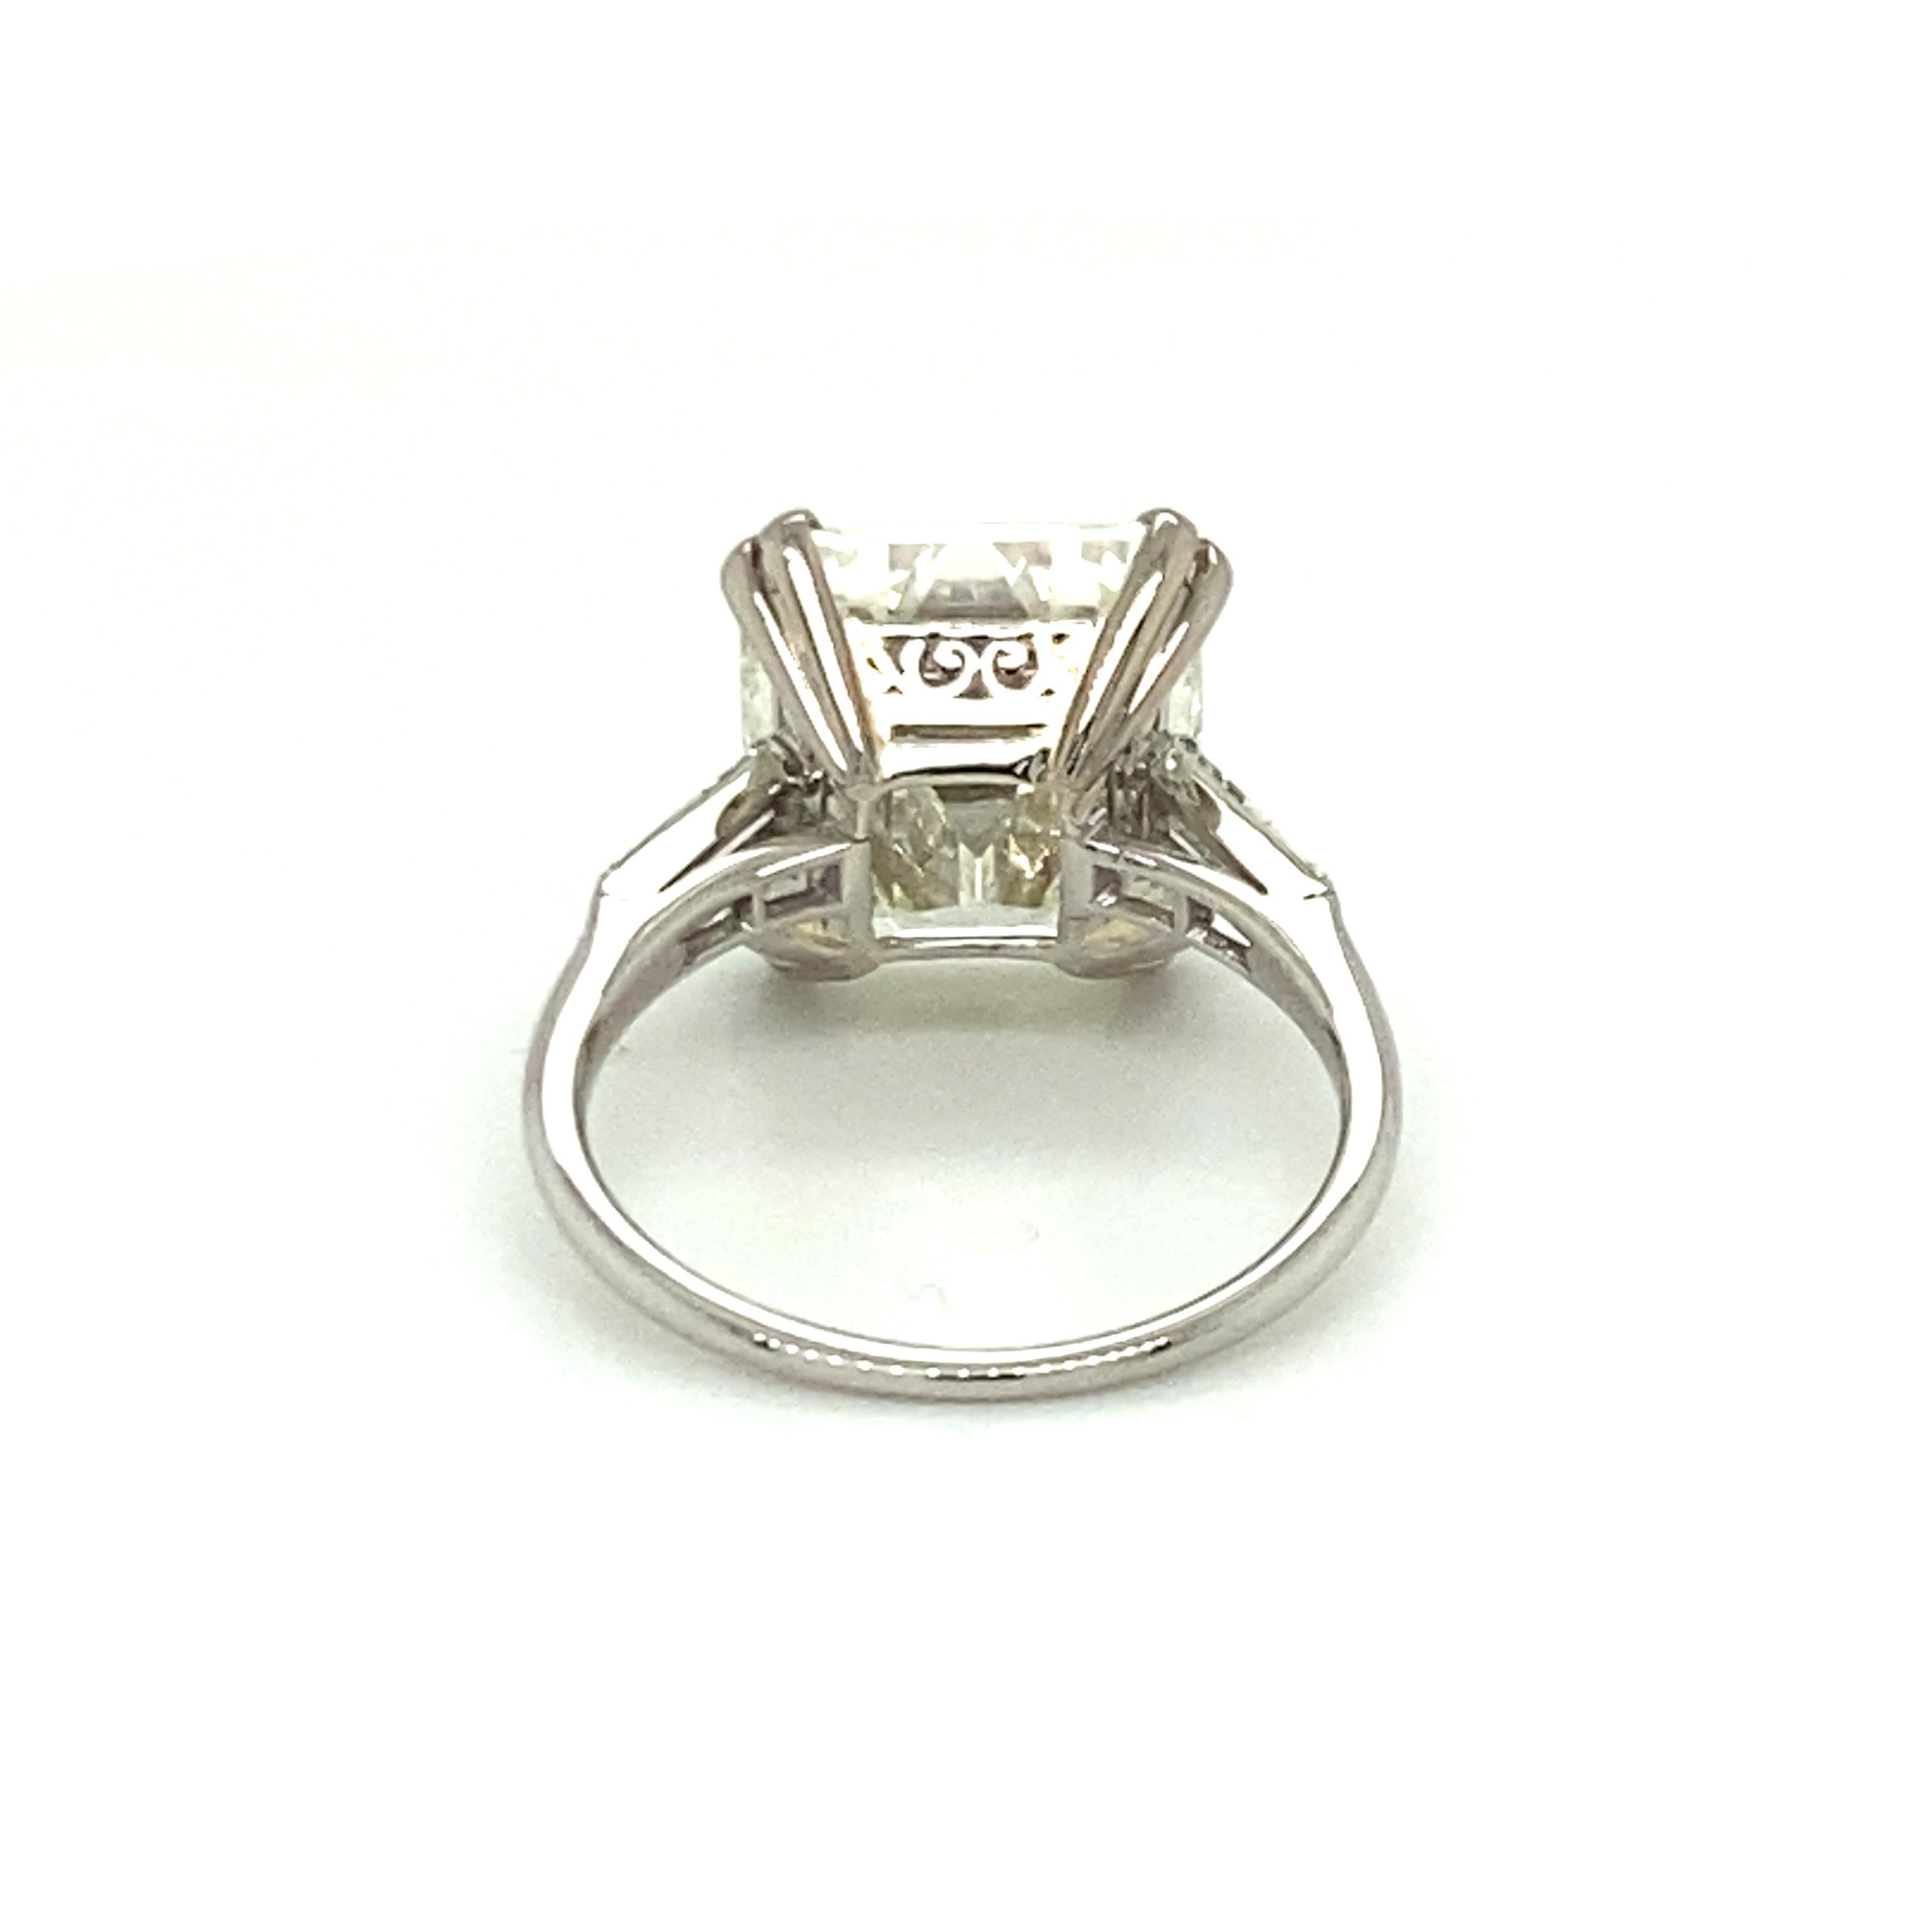 Stunning 7.34 Ct GIA Certified Emerald-Cut Diamond Ring in Platinum 950 1